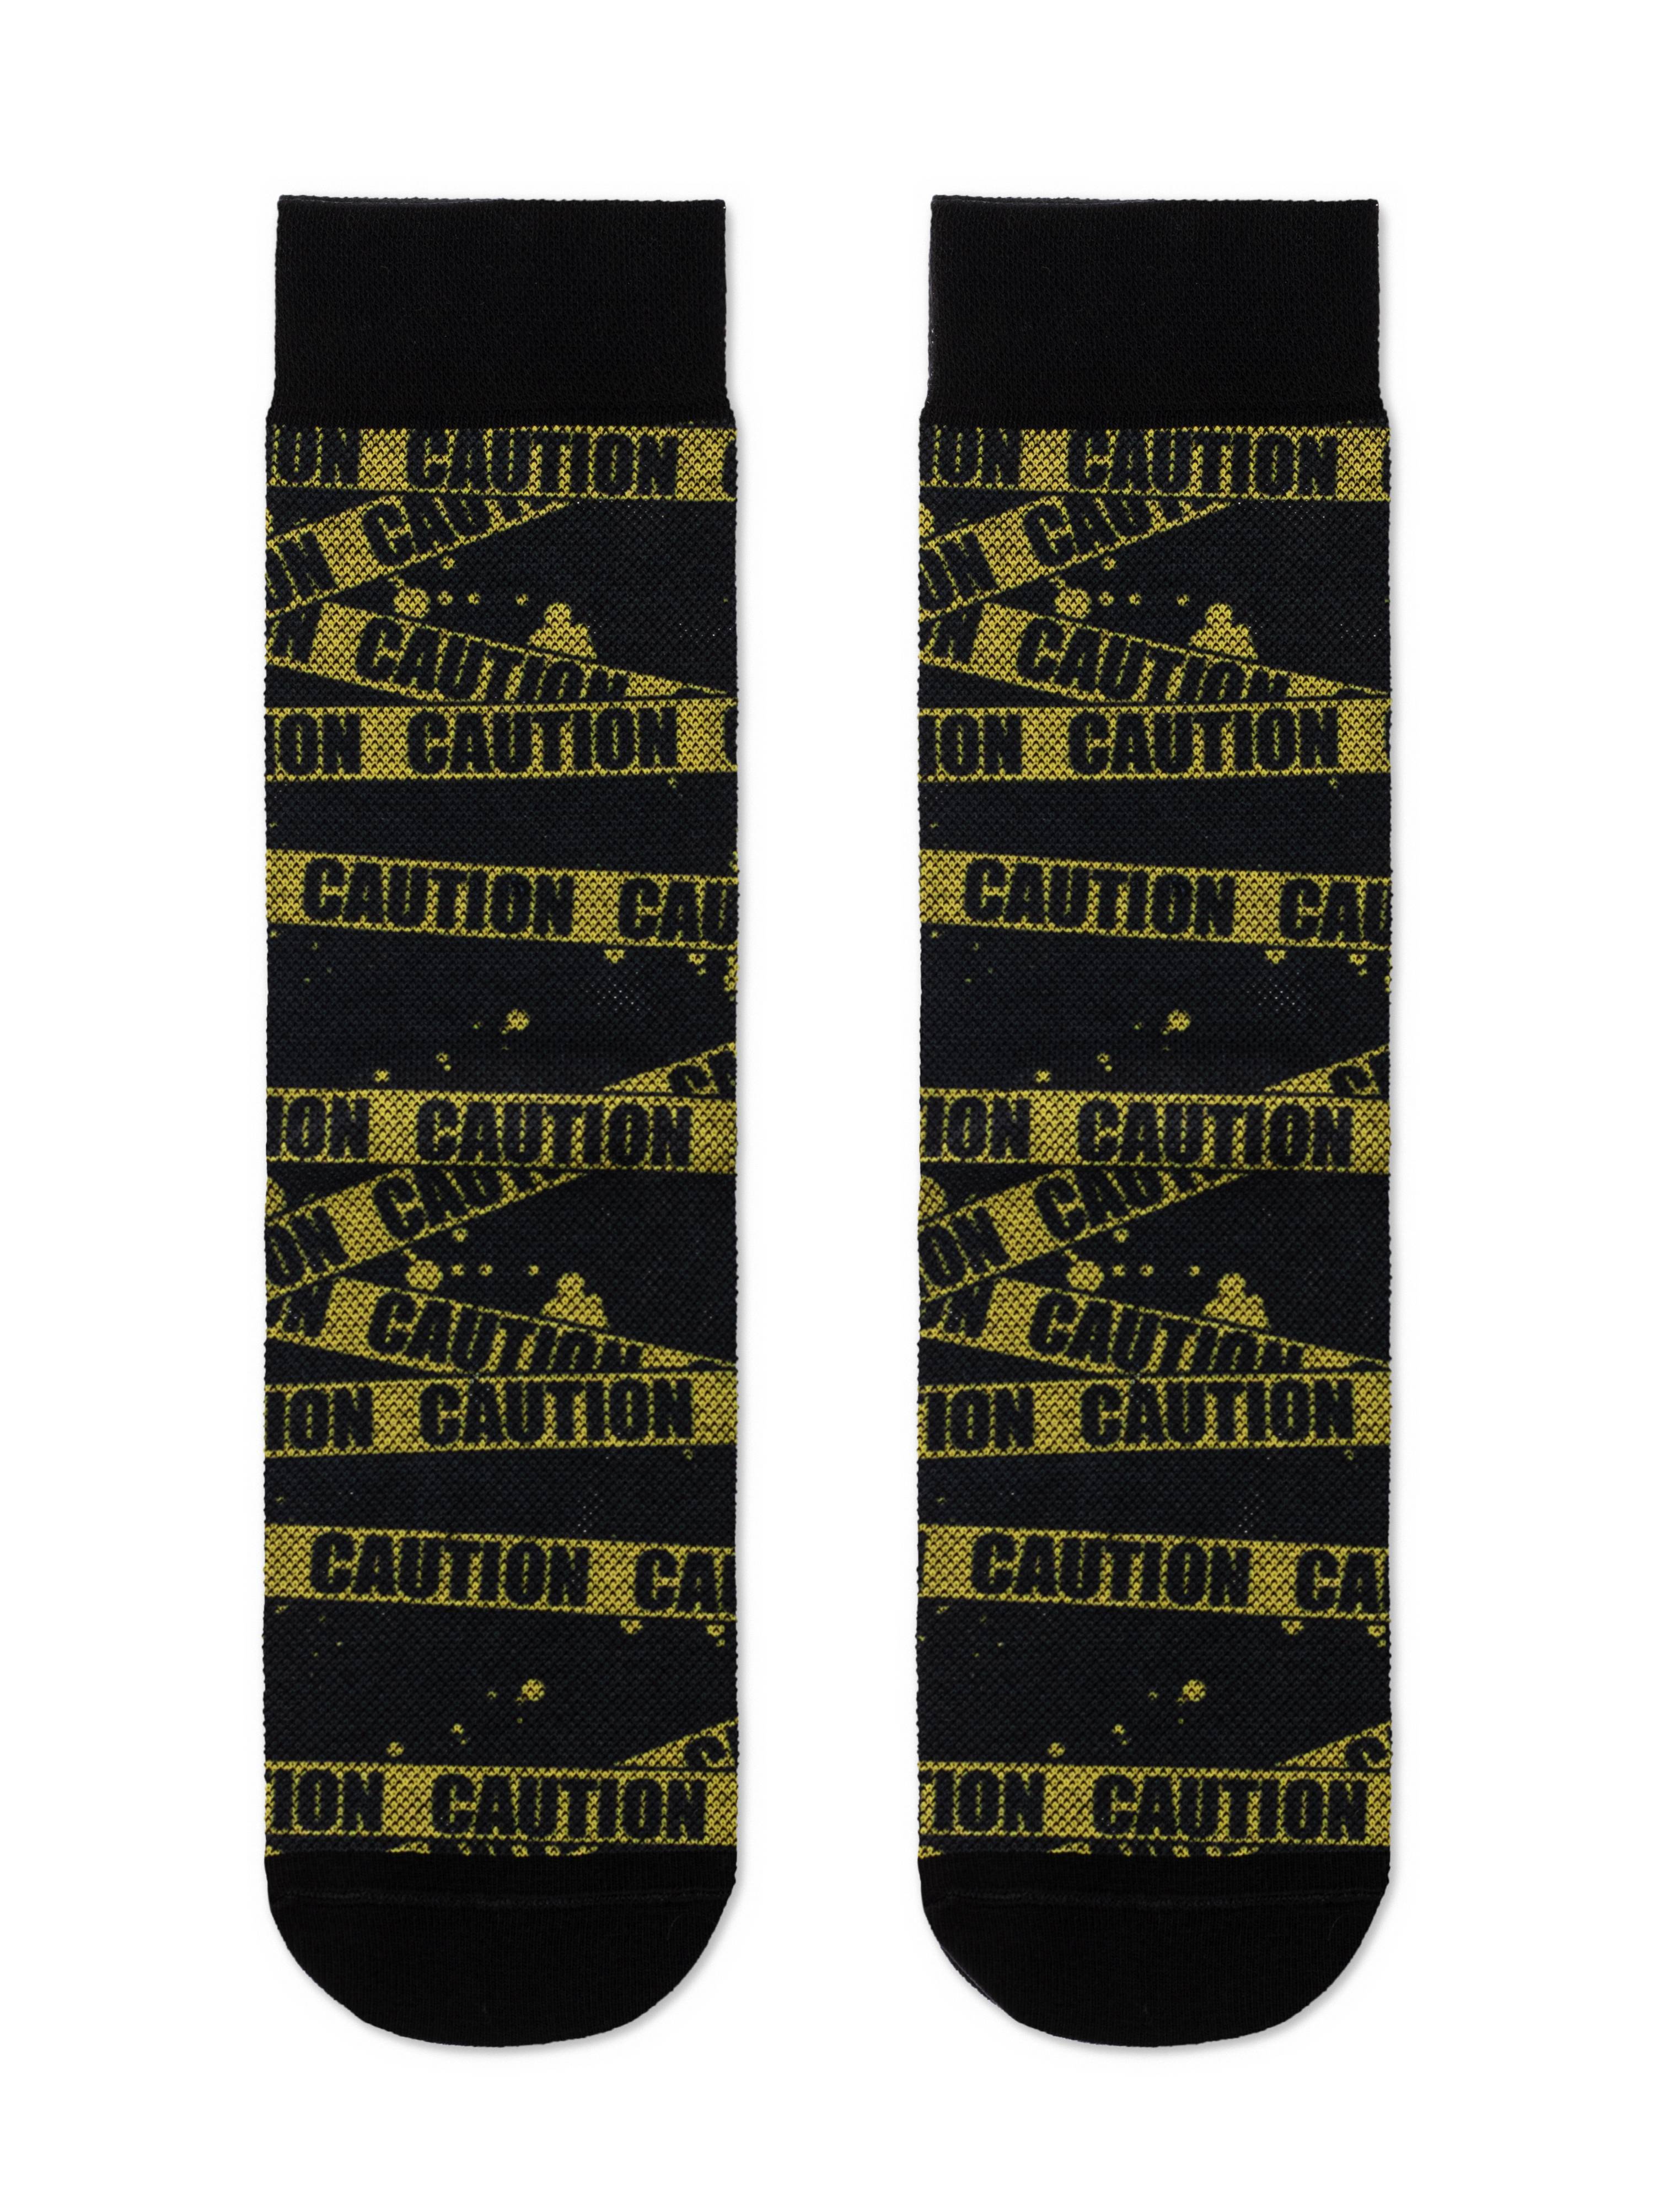 Носки с хлопком «Caution» Conte черного цвета